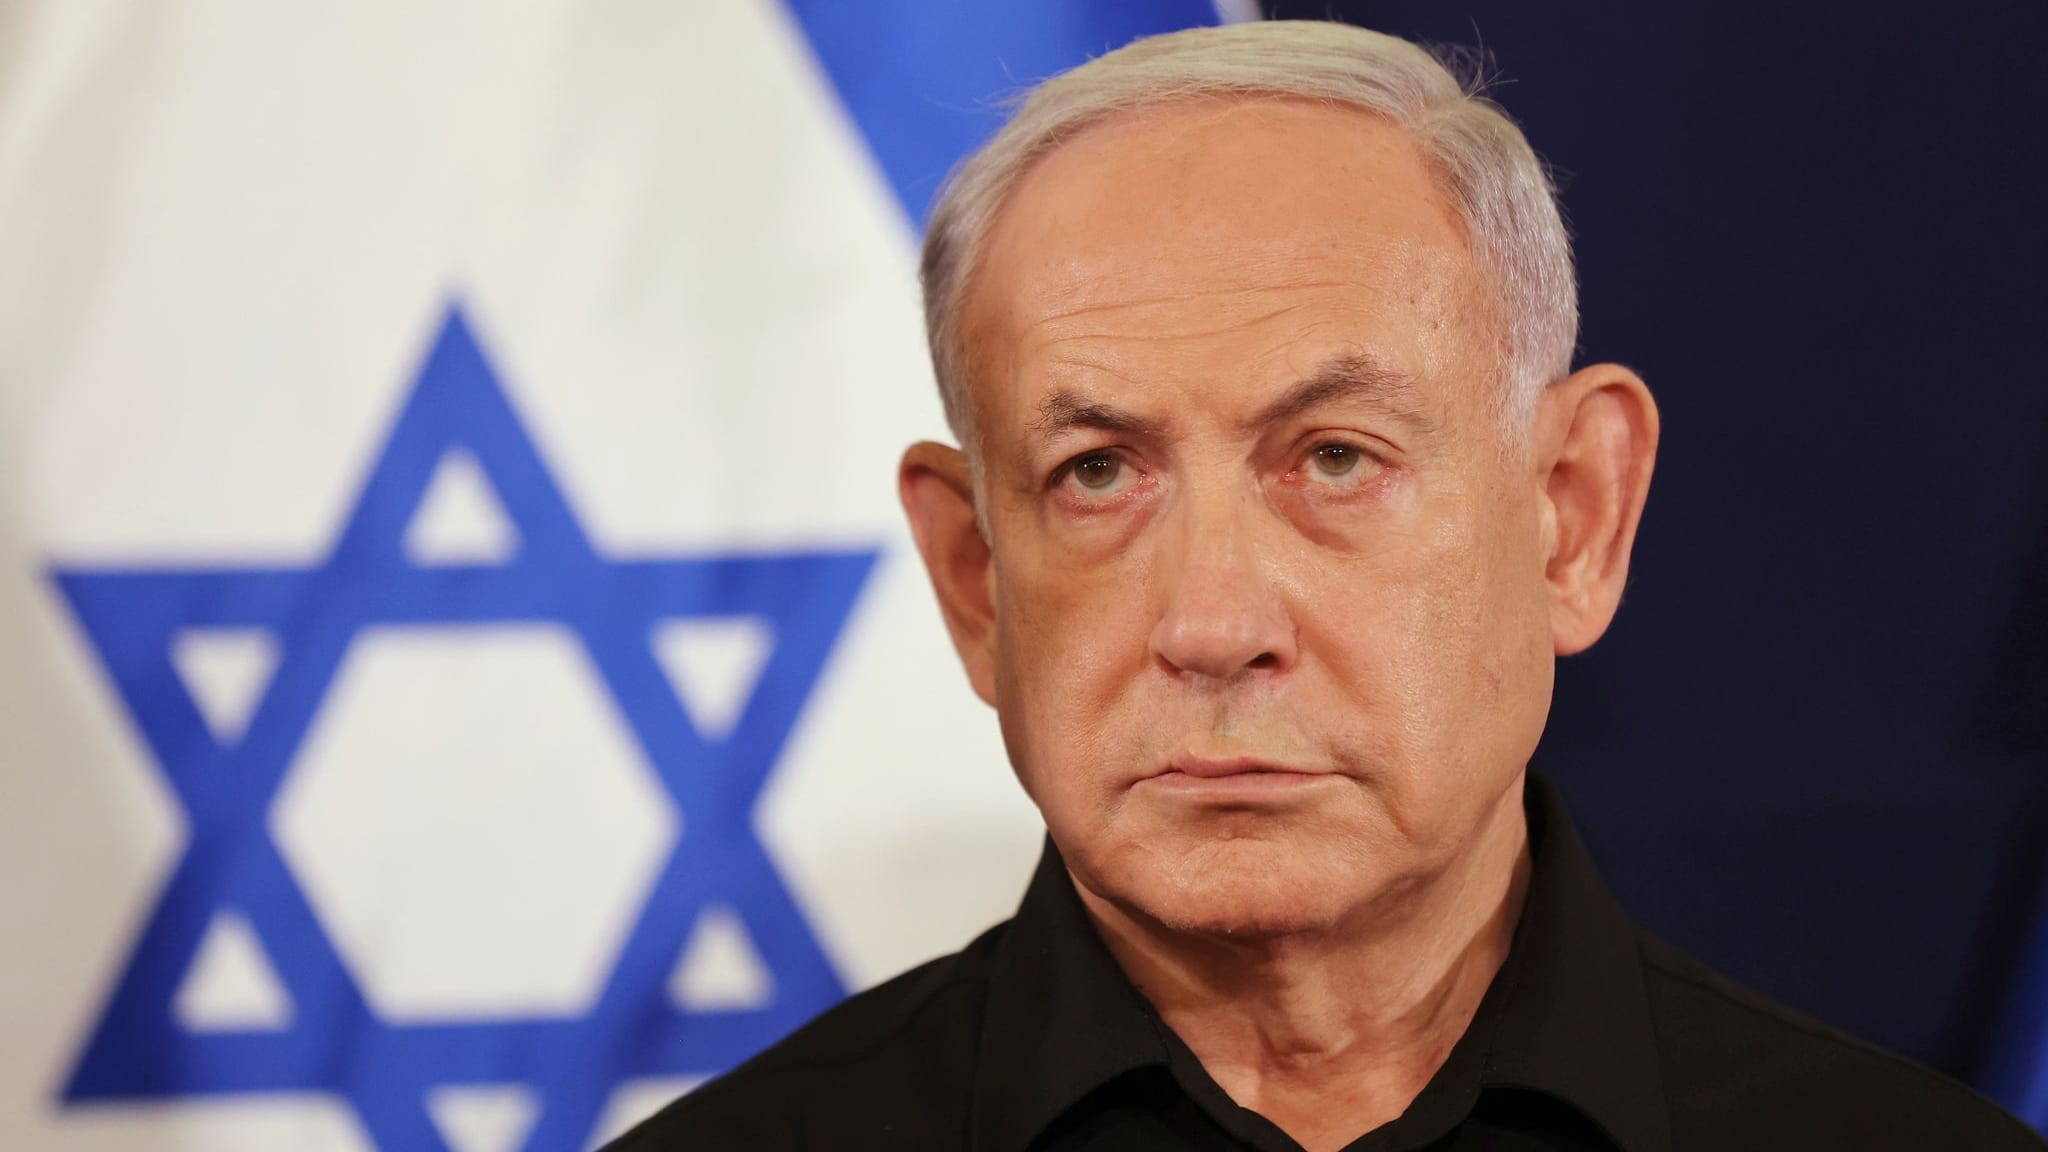 Nahost-Konflikt: Netanjahu will trotz Kritik nach Rafah | Newsblog